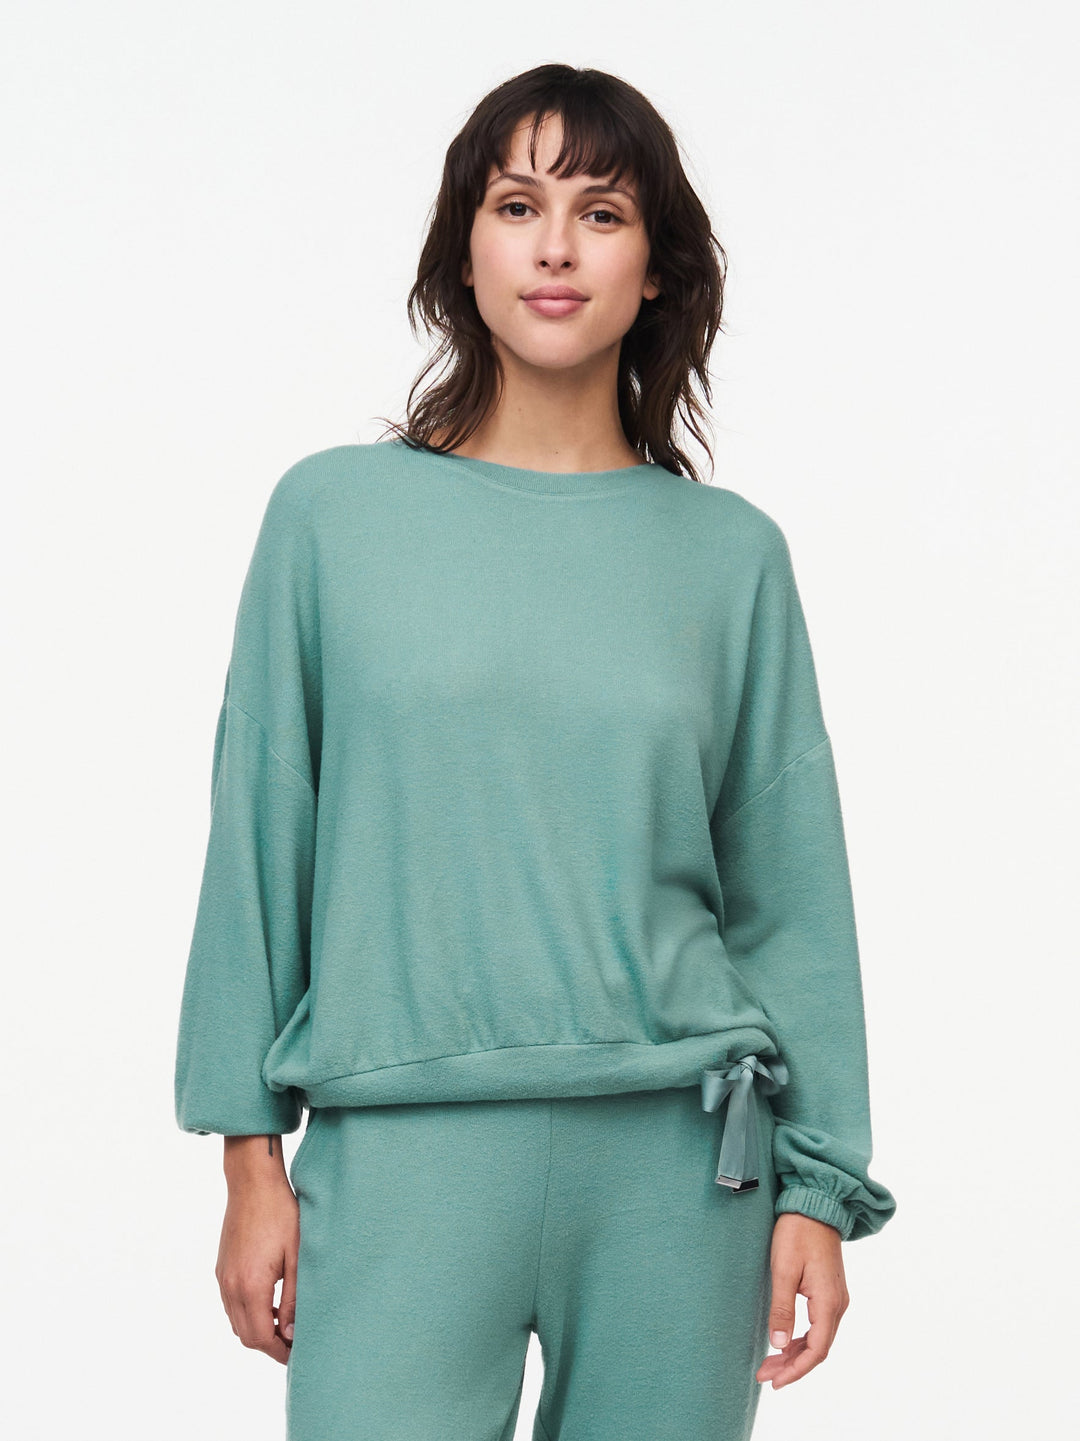 Passionata Ocea Long Sleeved T-Shirt - Trellis Green Top Passionata 